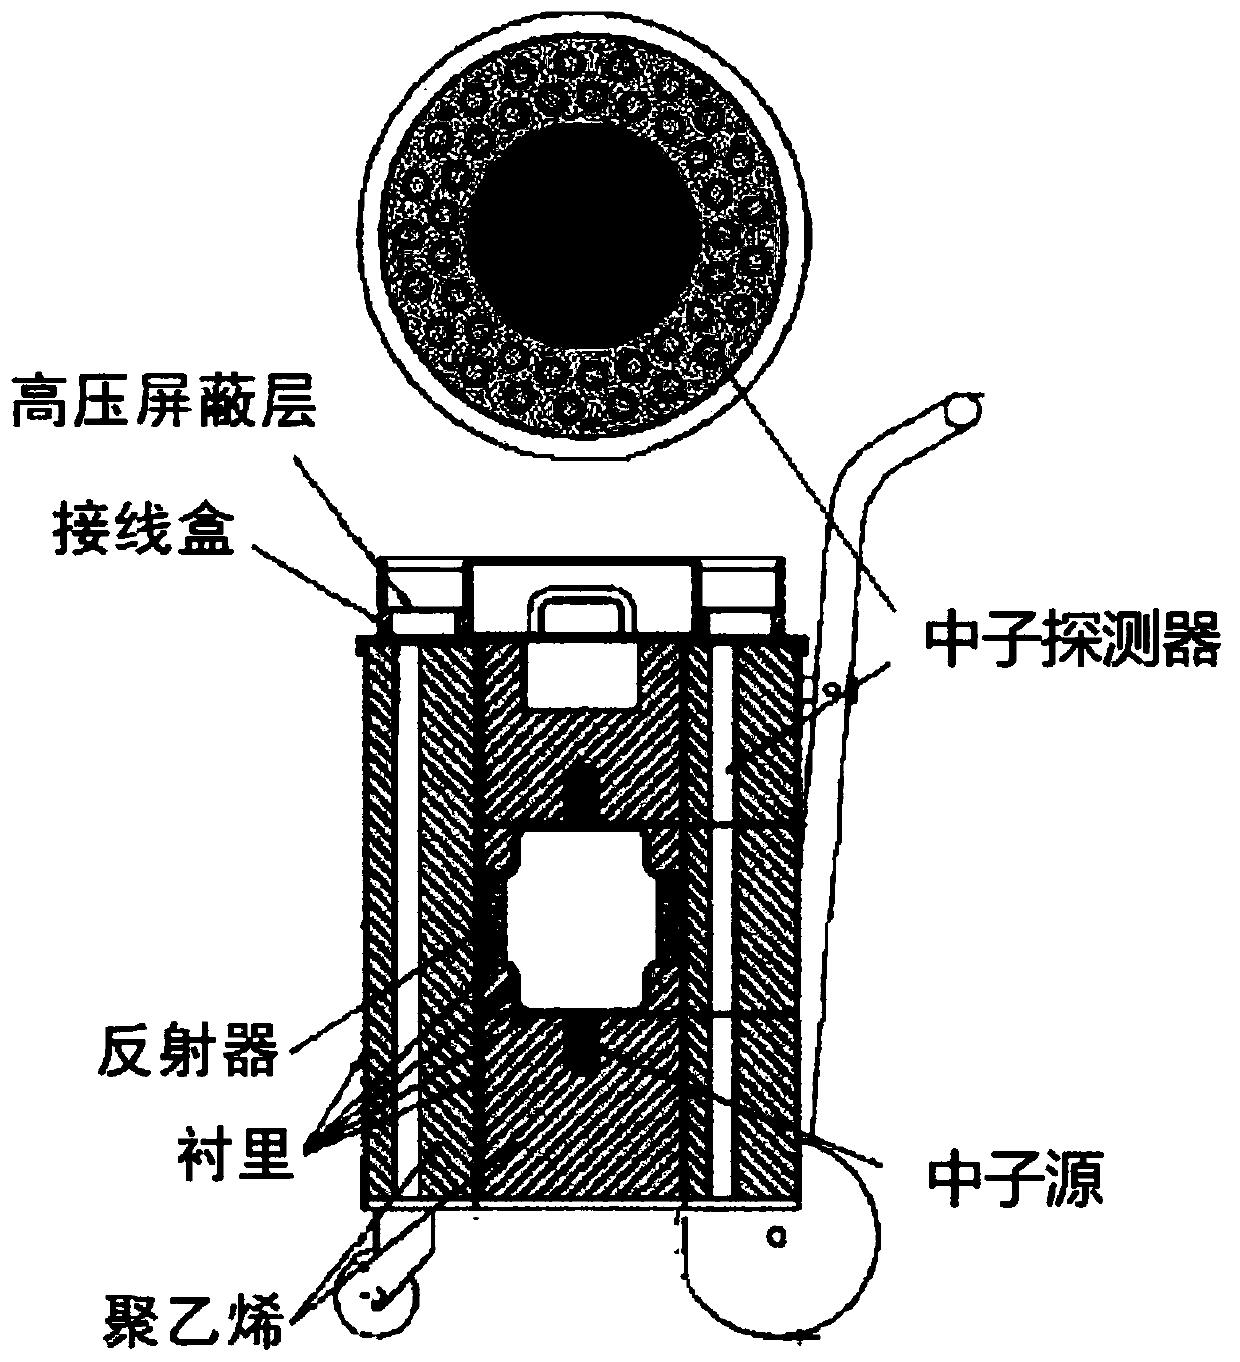 Method, device and apparatus for measuring plutonium mass of plutonium substance, and medium